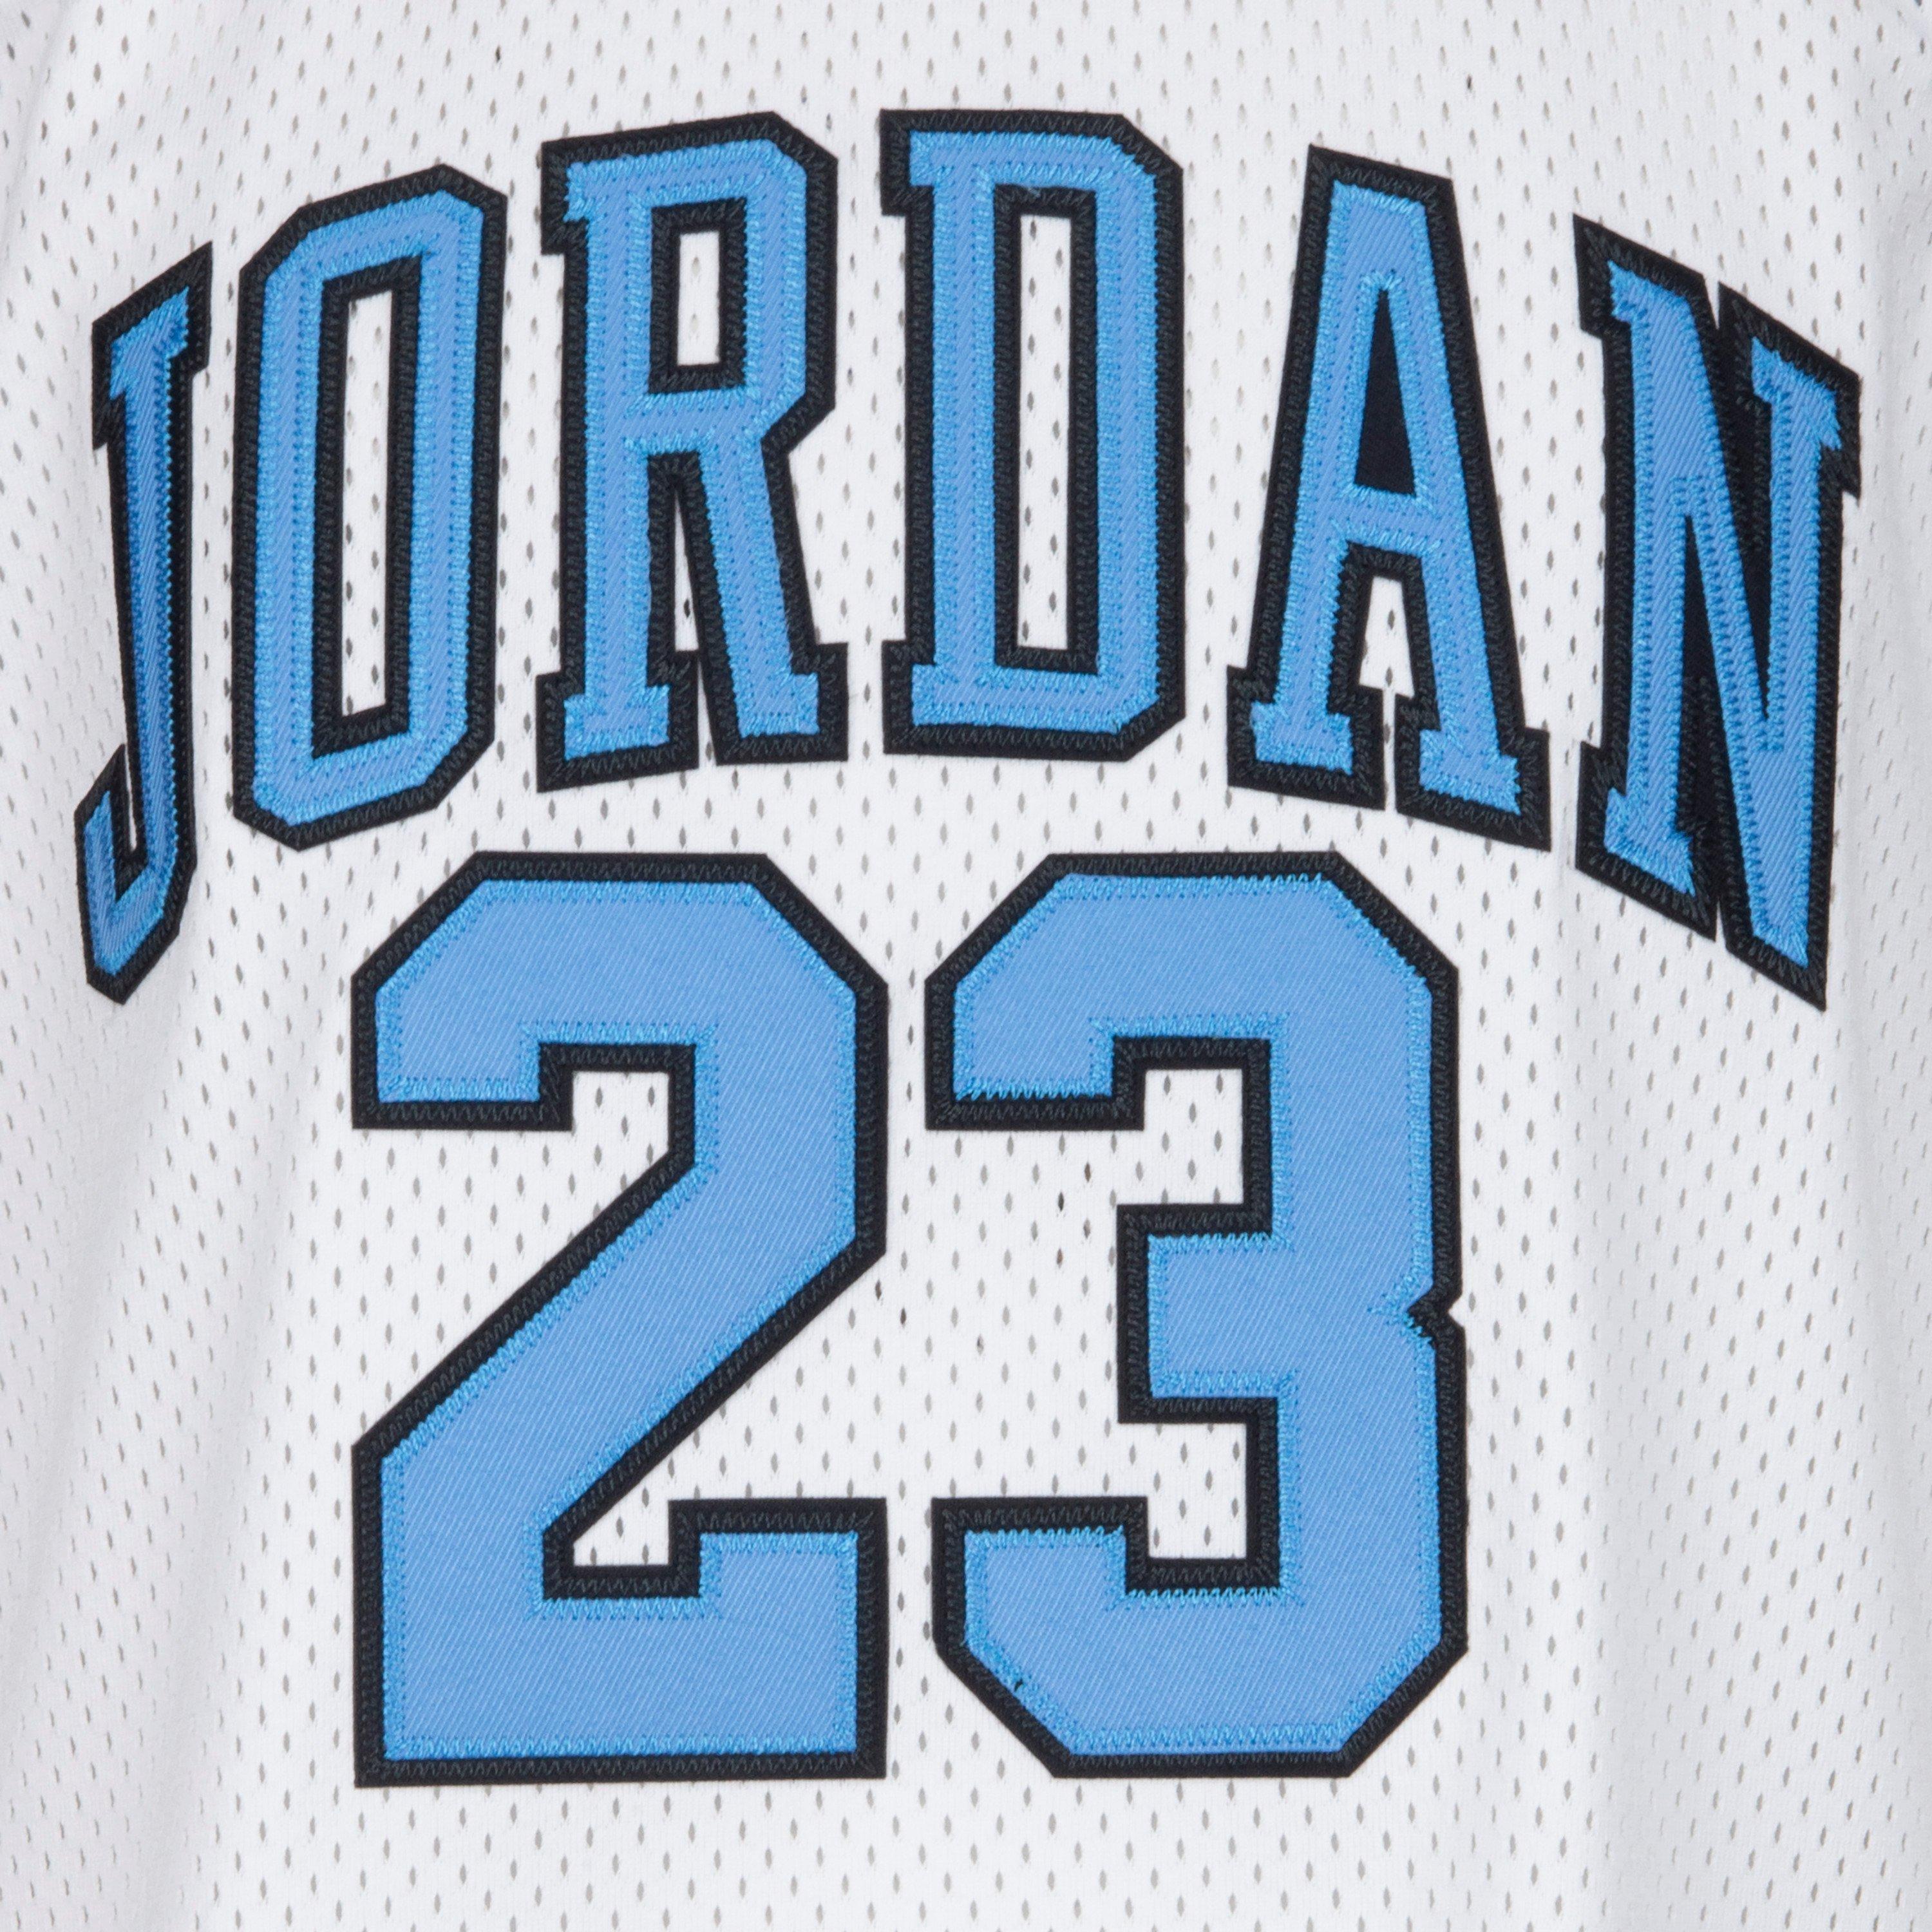 Jordan Big Boys' Jordan 23 Jersey-Blue - Hibbett